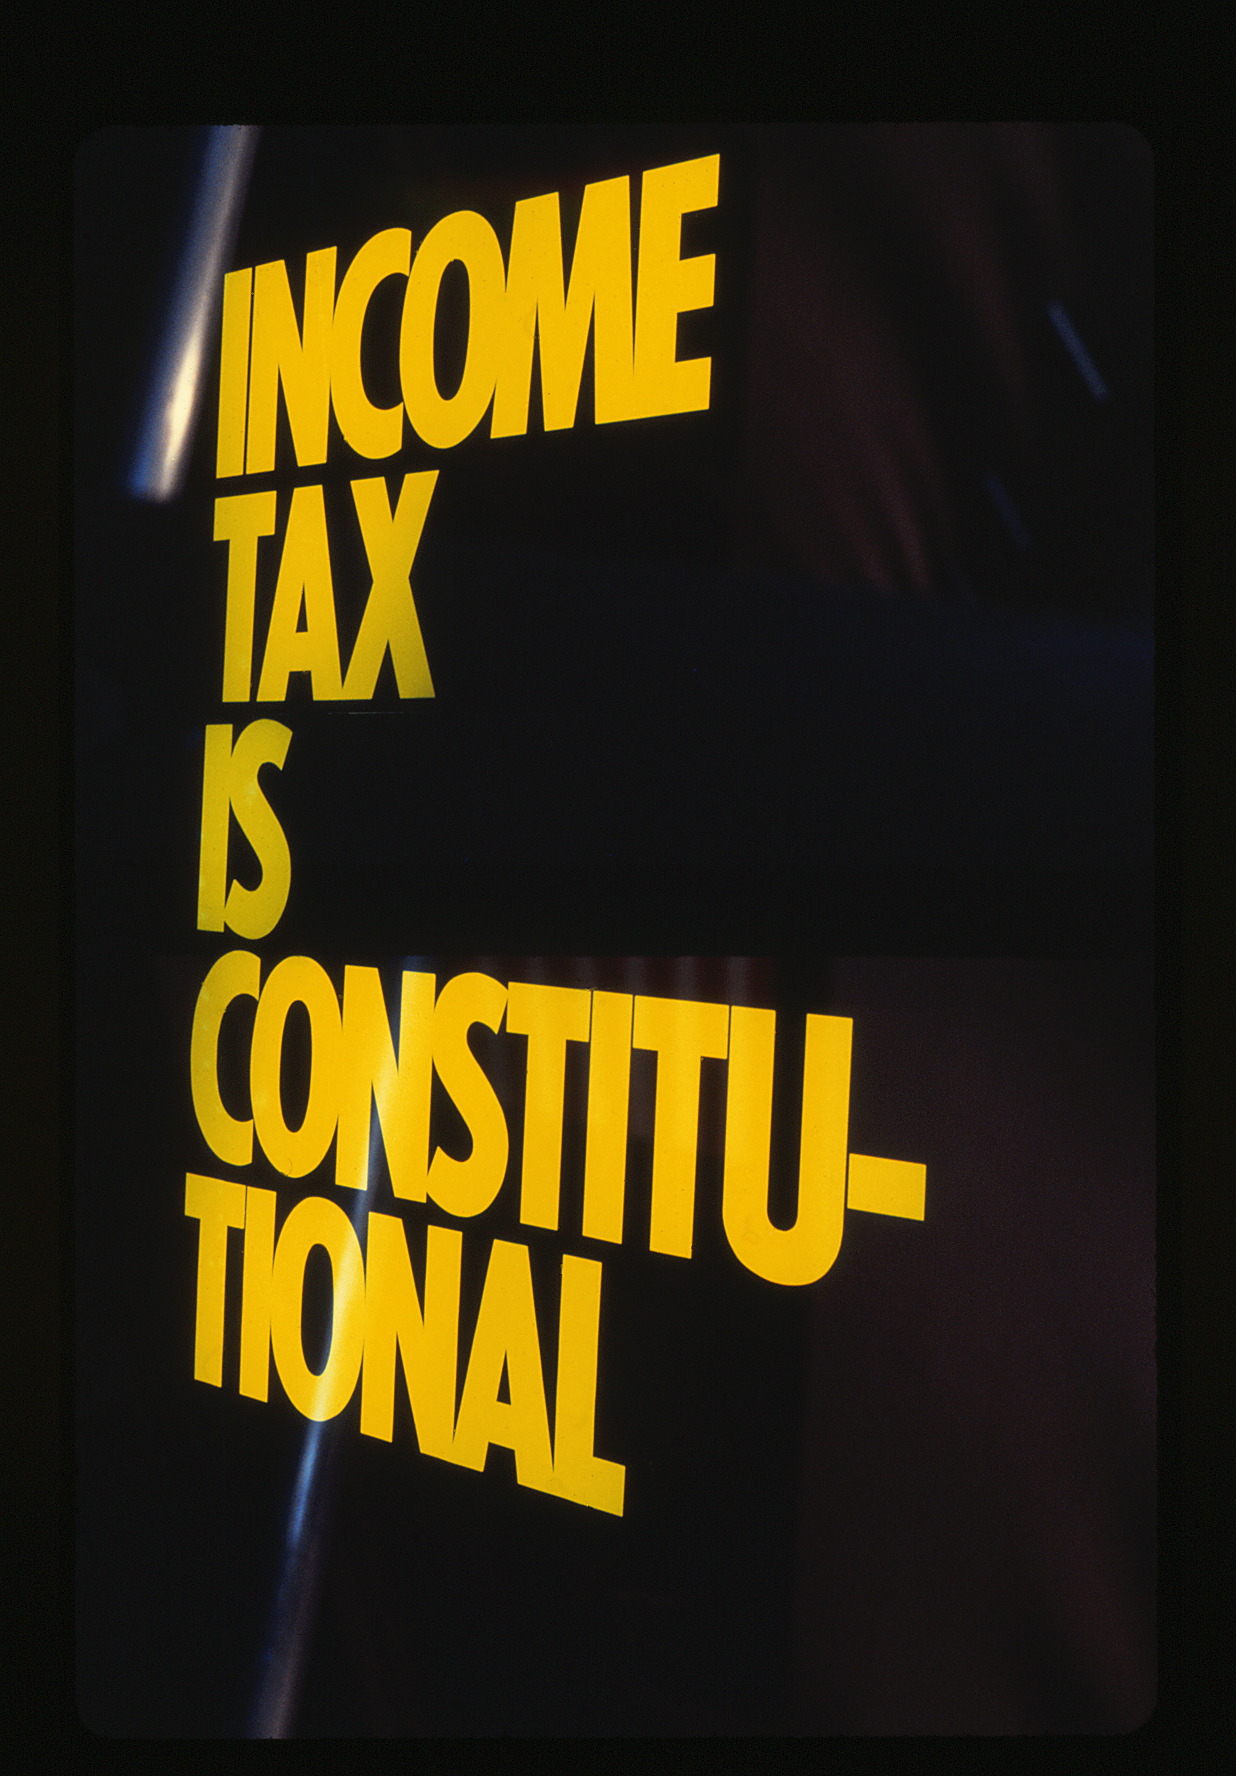 US Treasury Income Tax